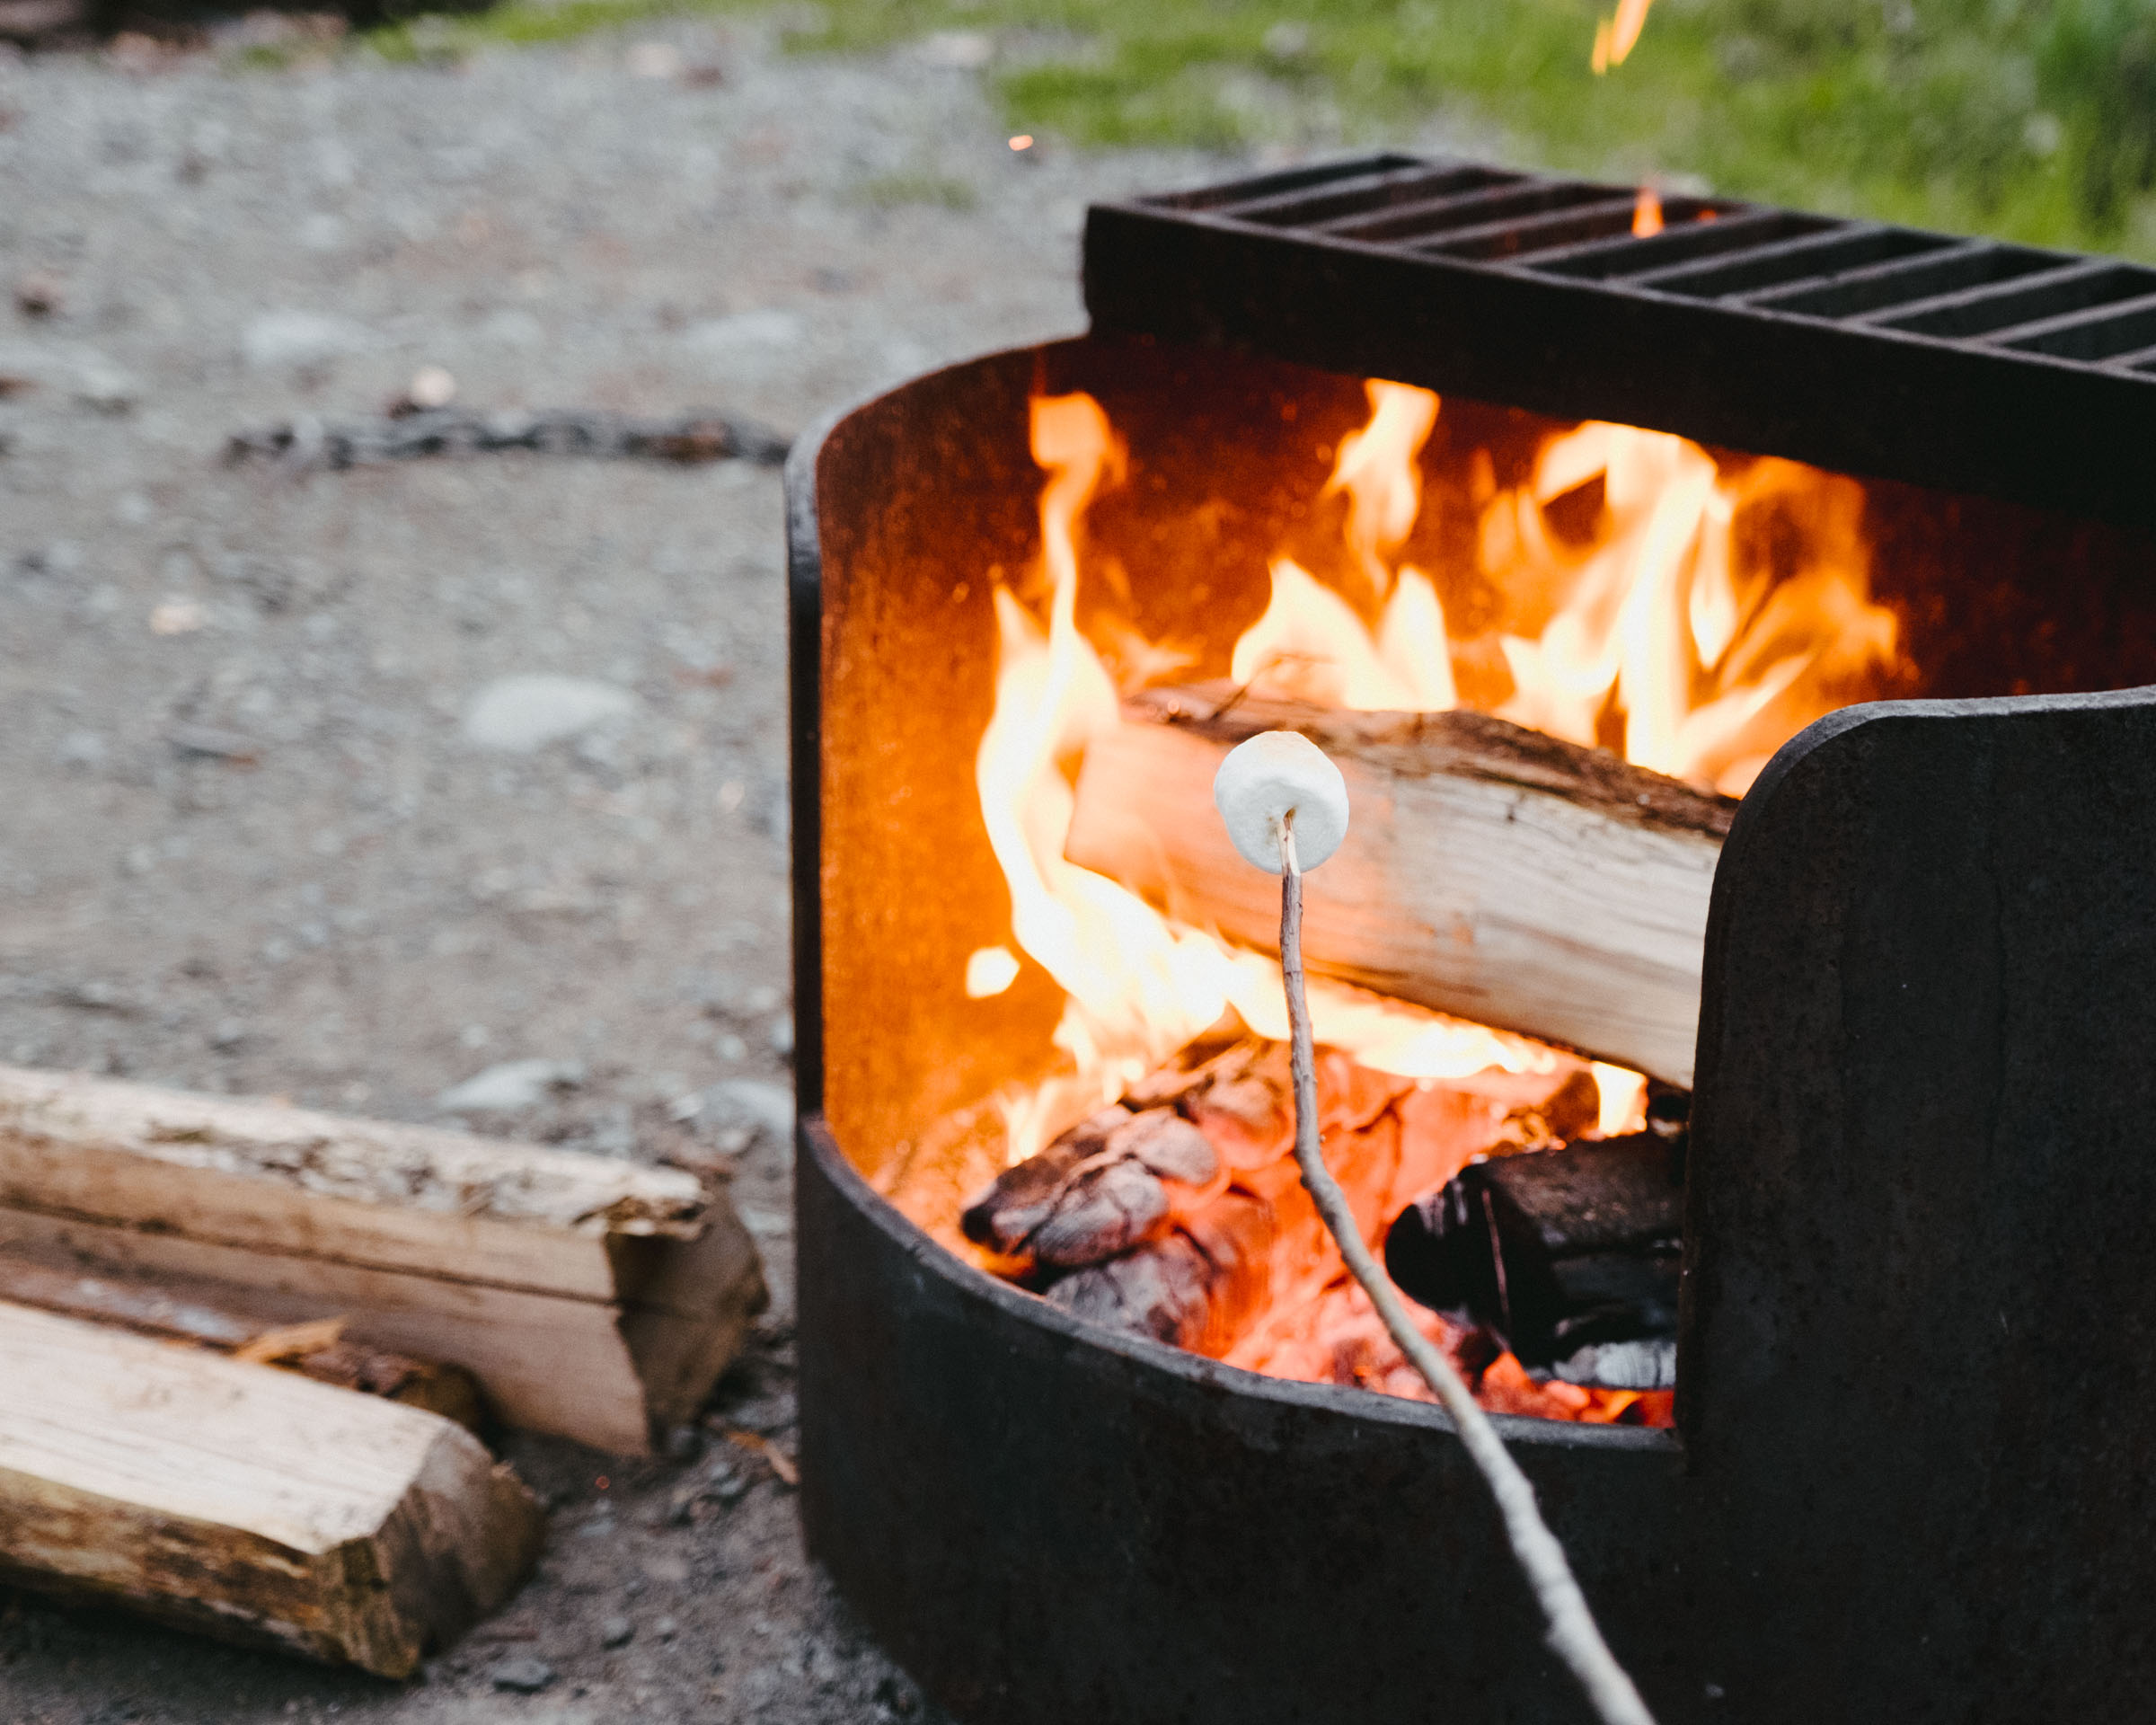 Roasting marshmallows at Ross Lake in Skagit Valley Provincial Park